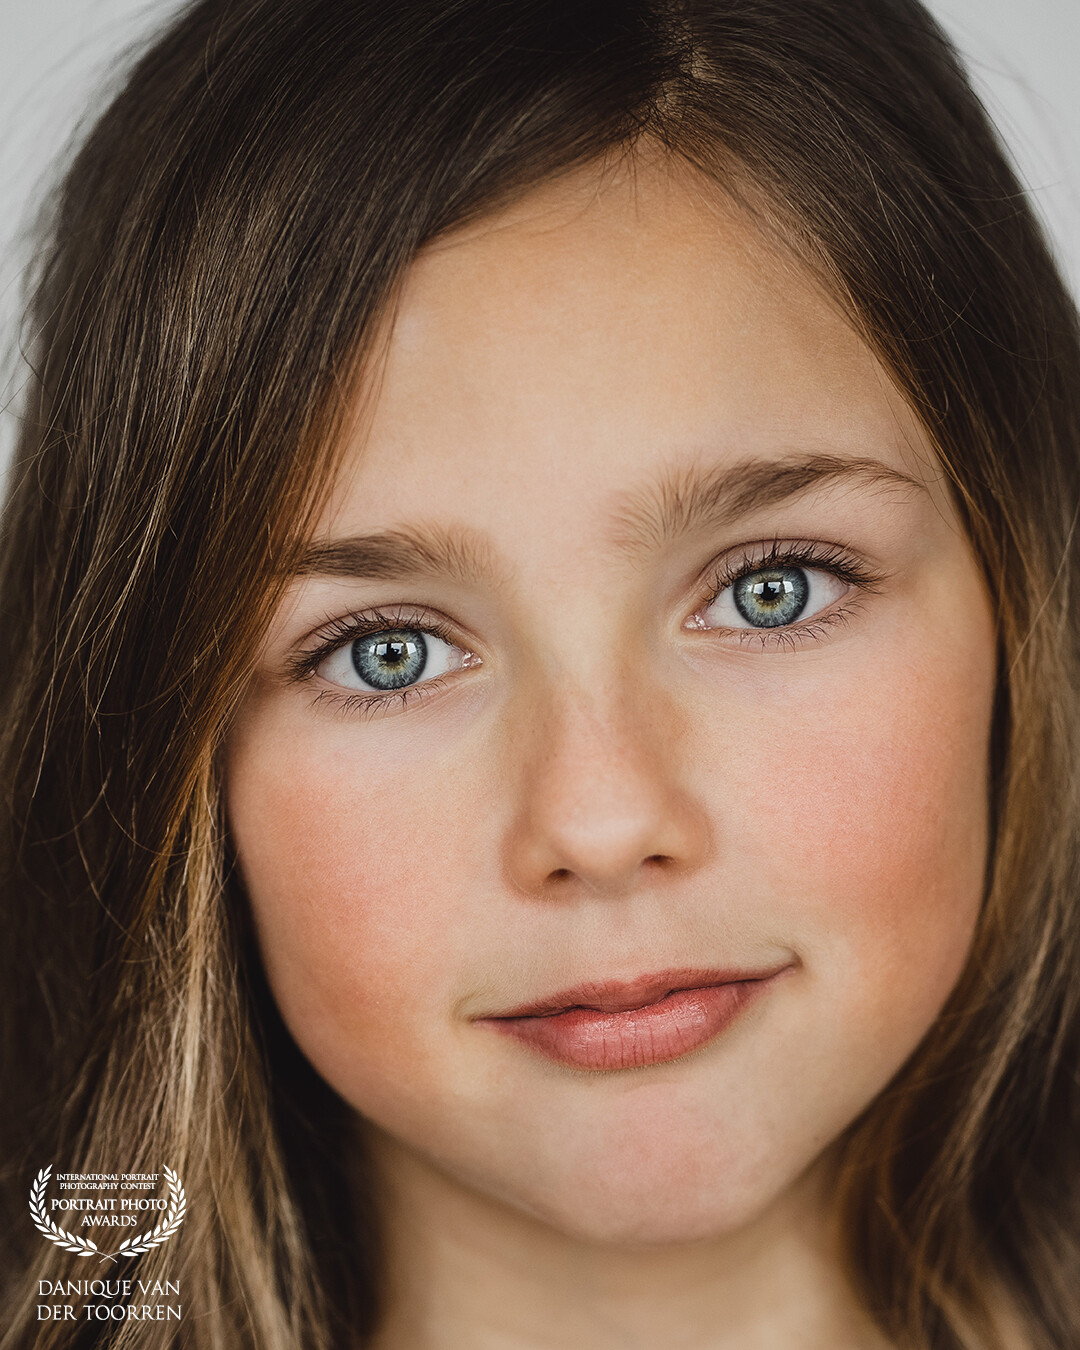 Model: Ravenna 9 years old<br />
Photo & Lightroom edit: @daniquevdtphotography